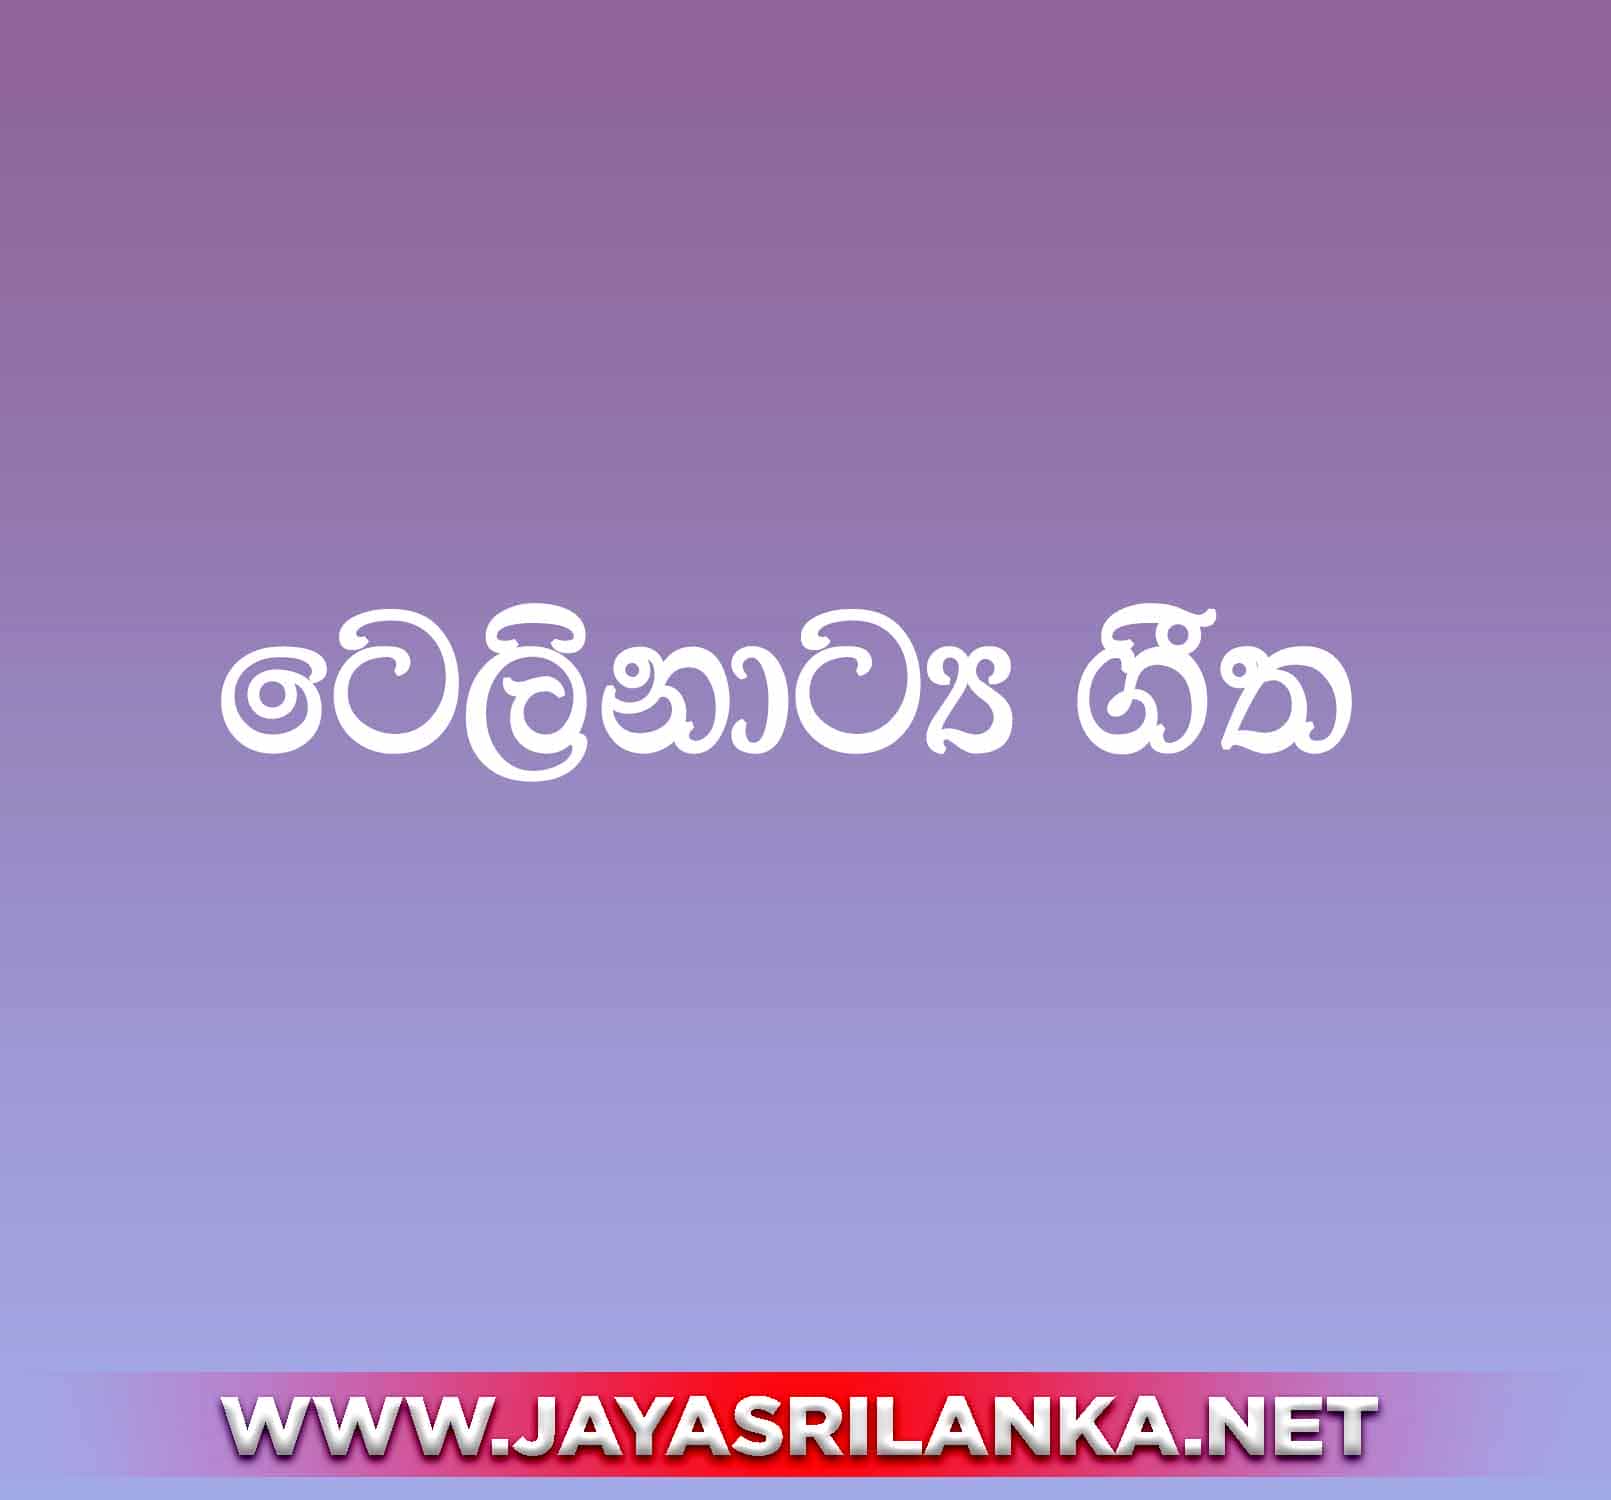 Ahasata Tharu Ai Metharam - Sinhala Teledrama Songs mp3 Image